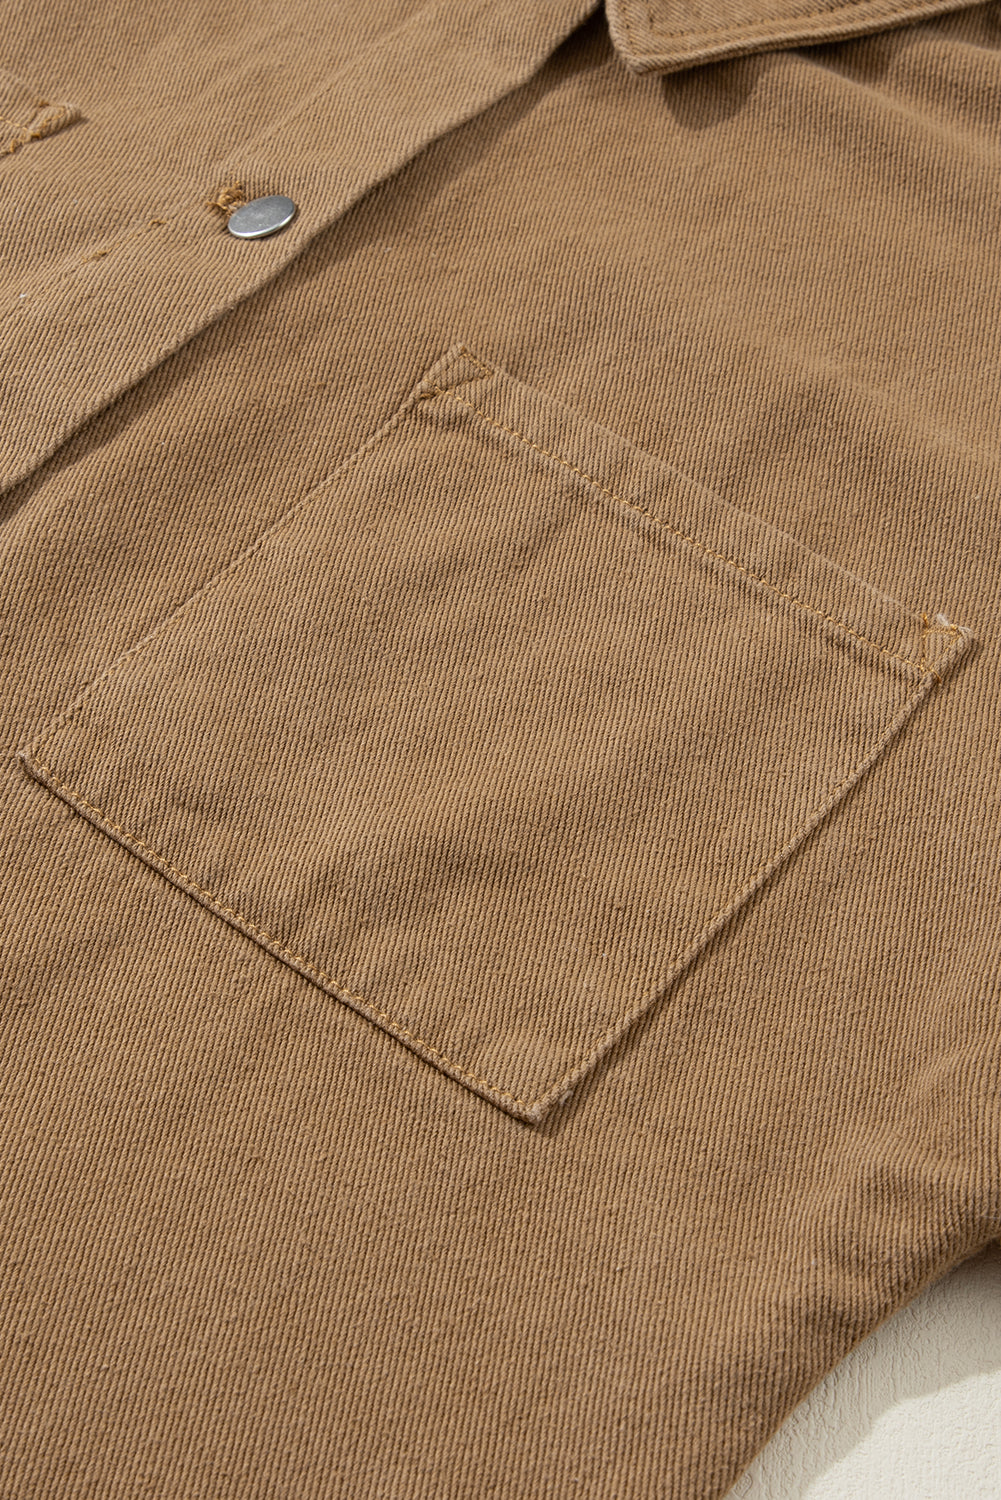 Strukturierte Strickärmel, Patchwork-Jeansjacke mit rohem Saum